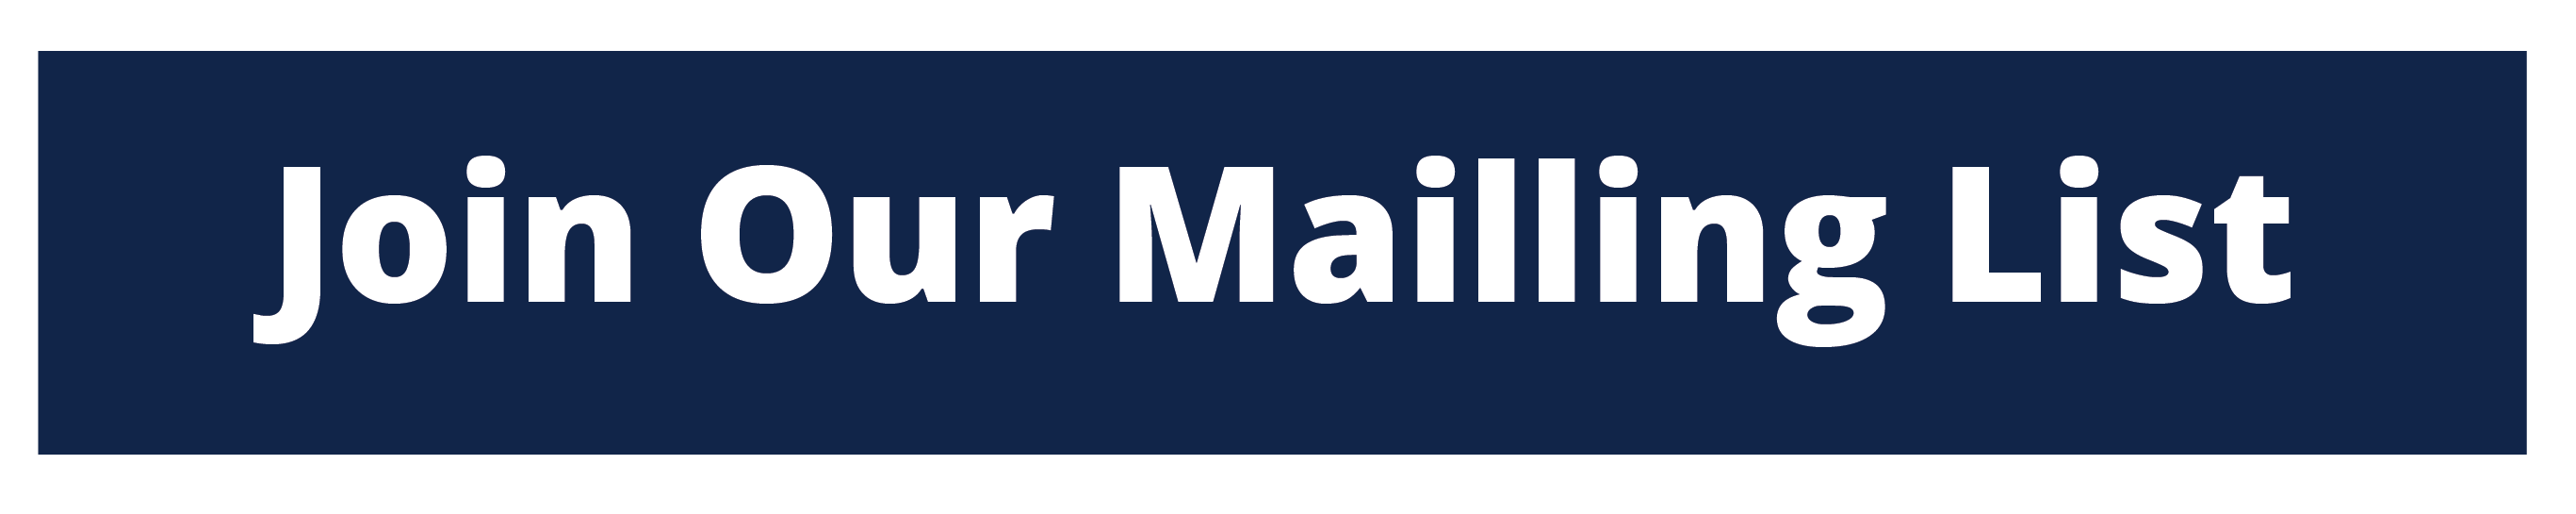 mailing list button